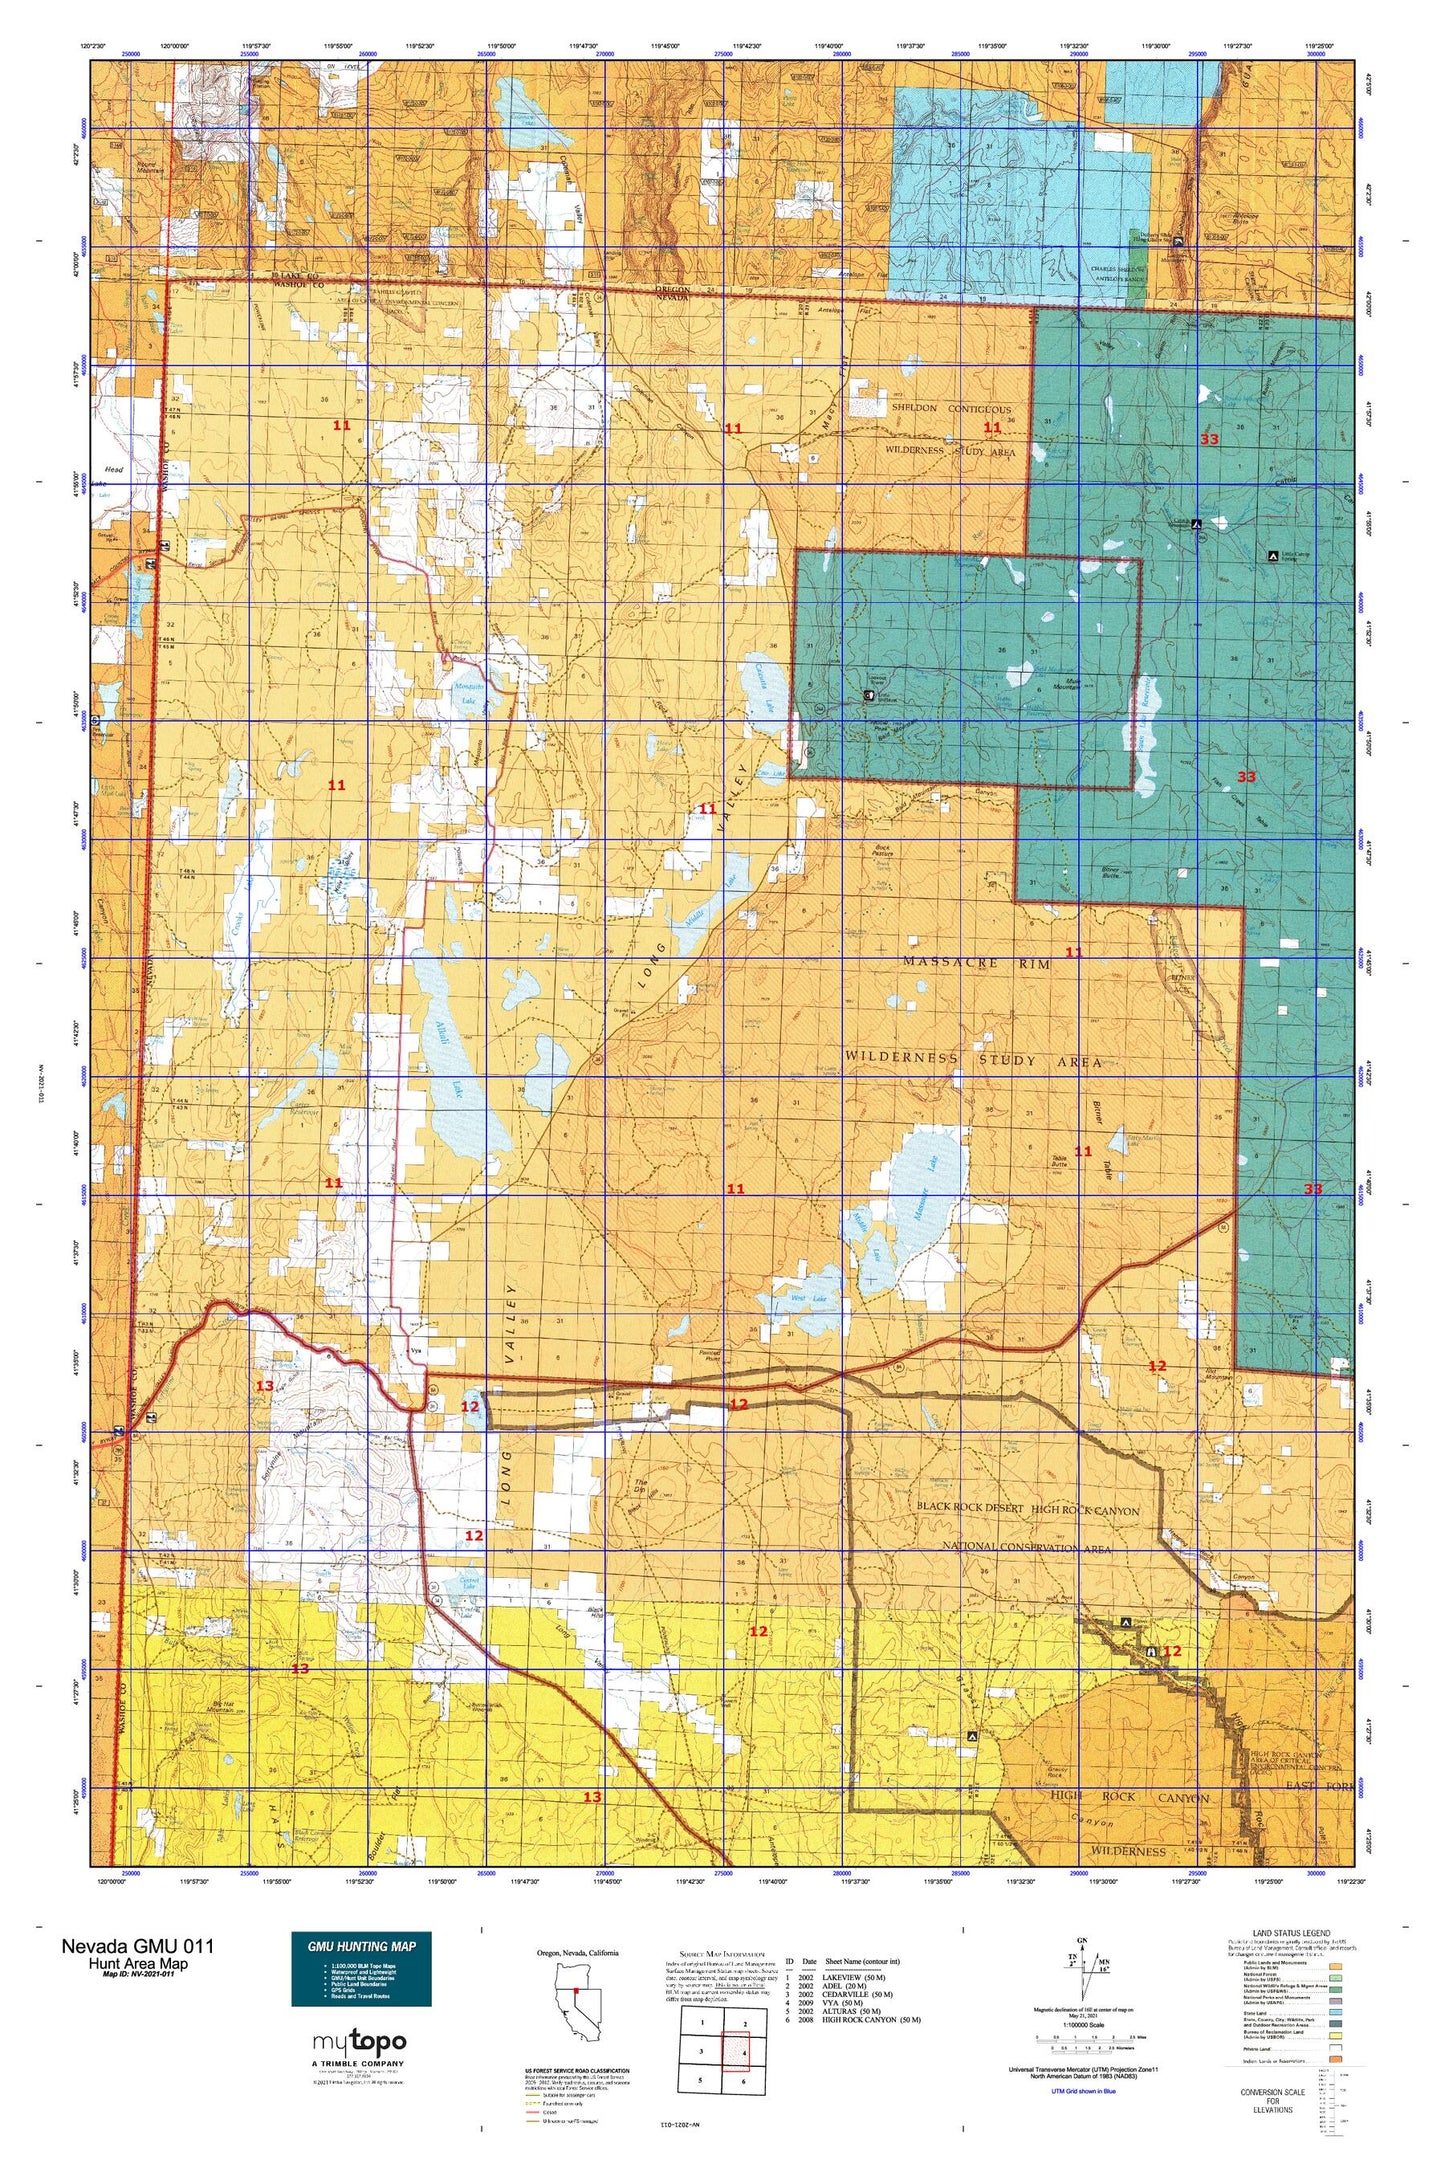 Nevada GMU 011 Map Image